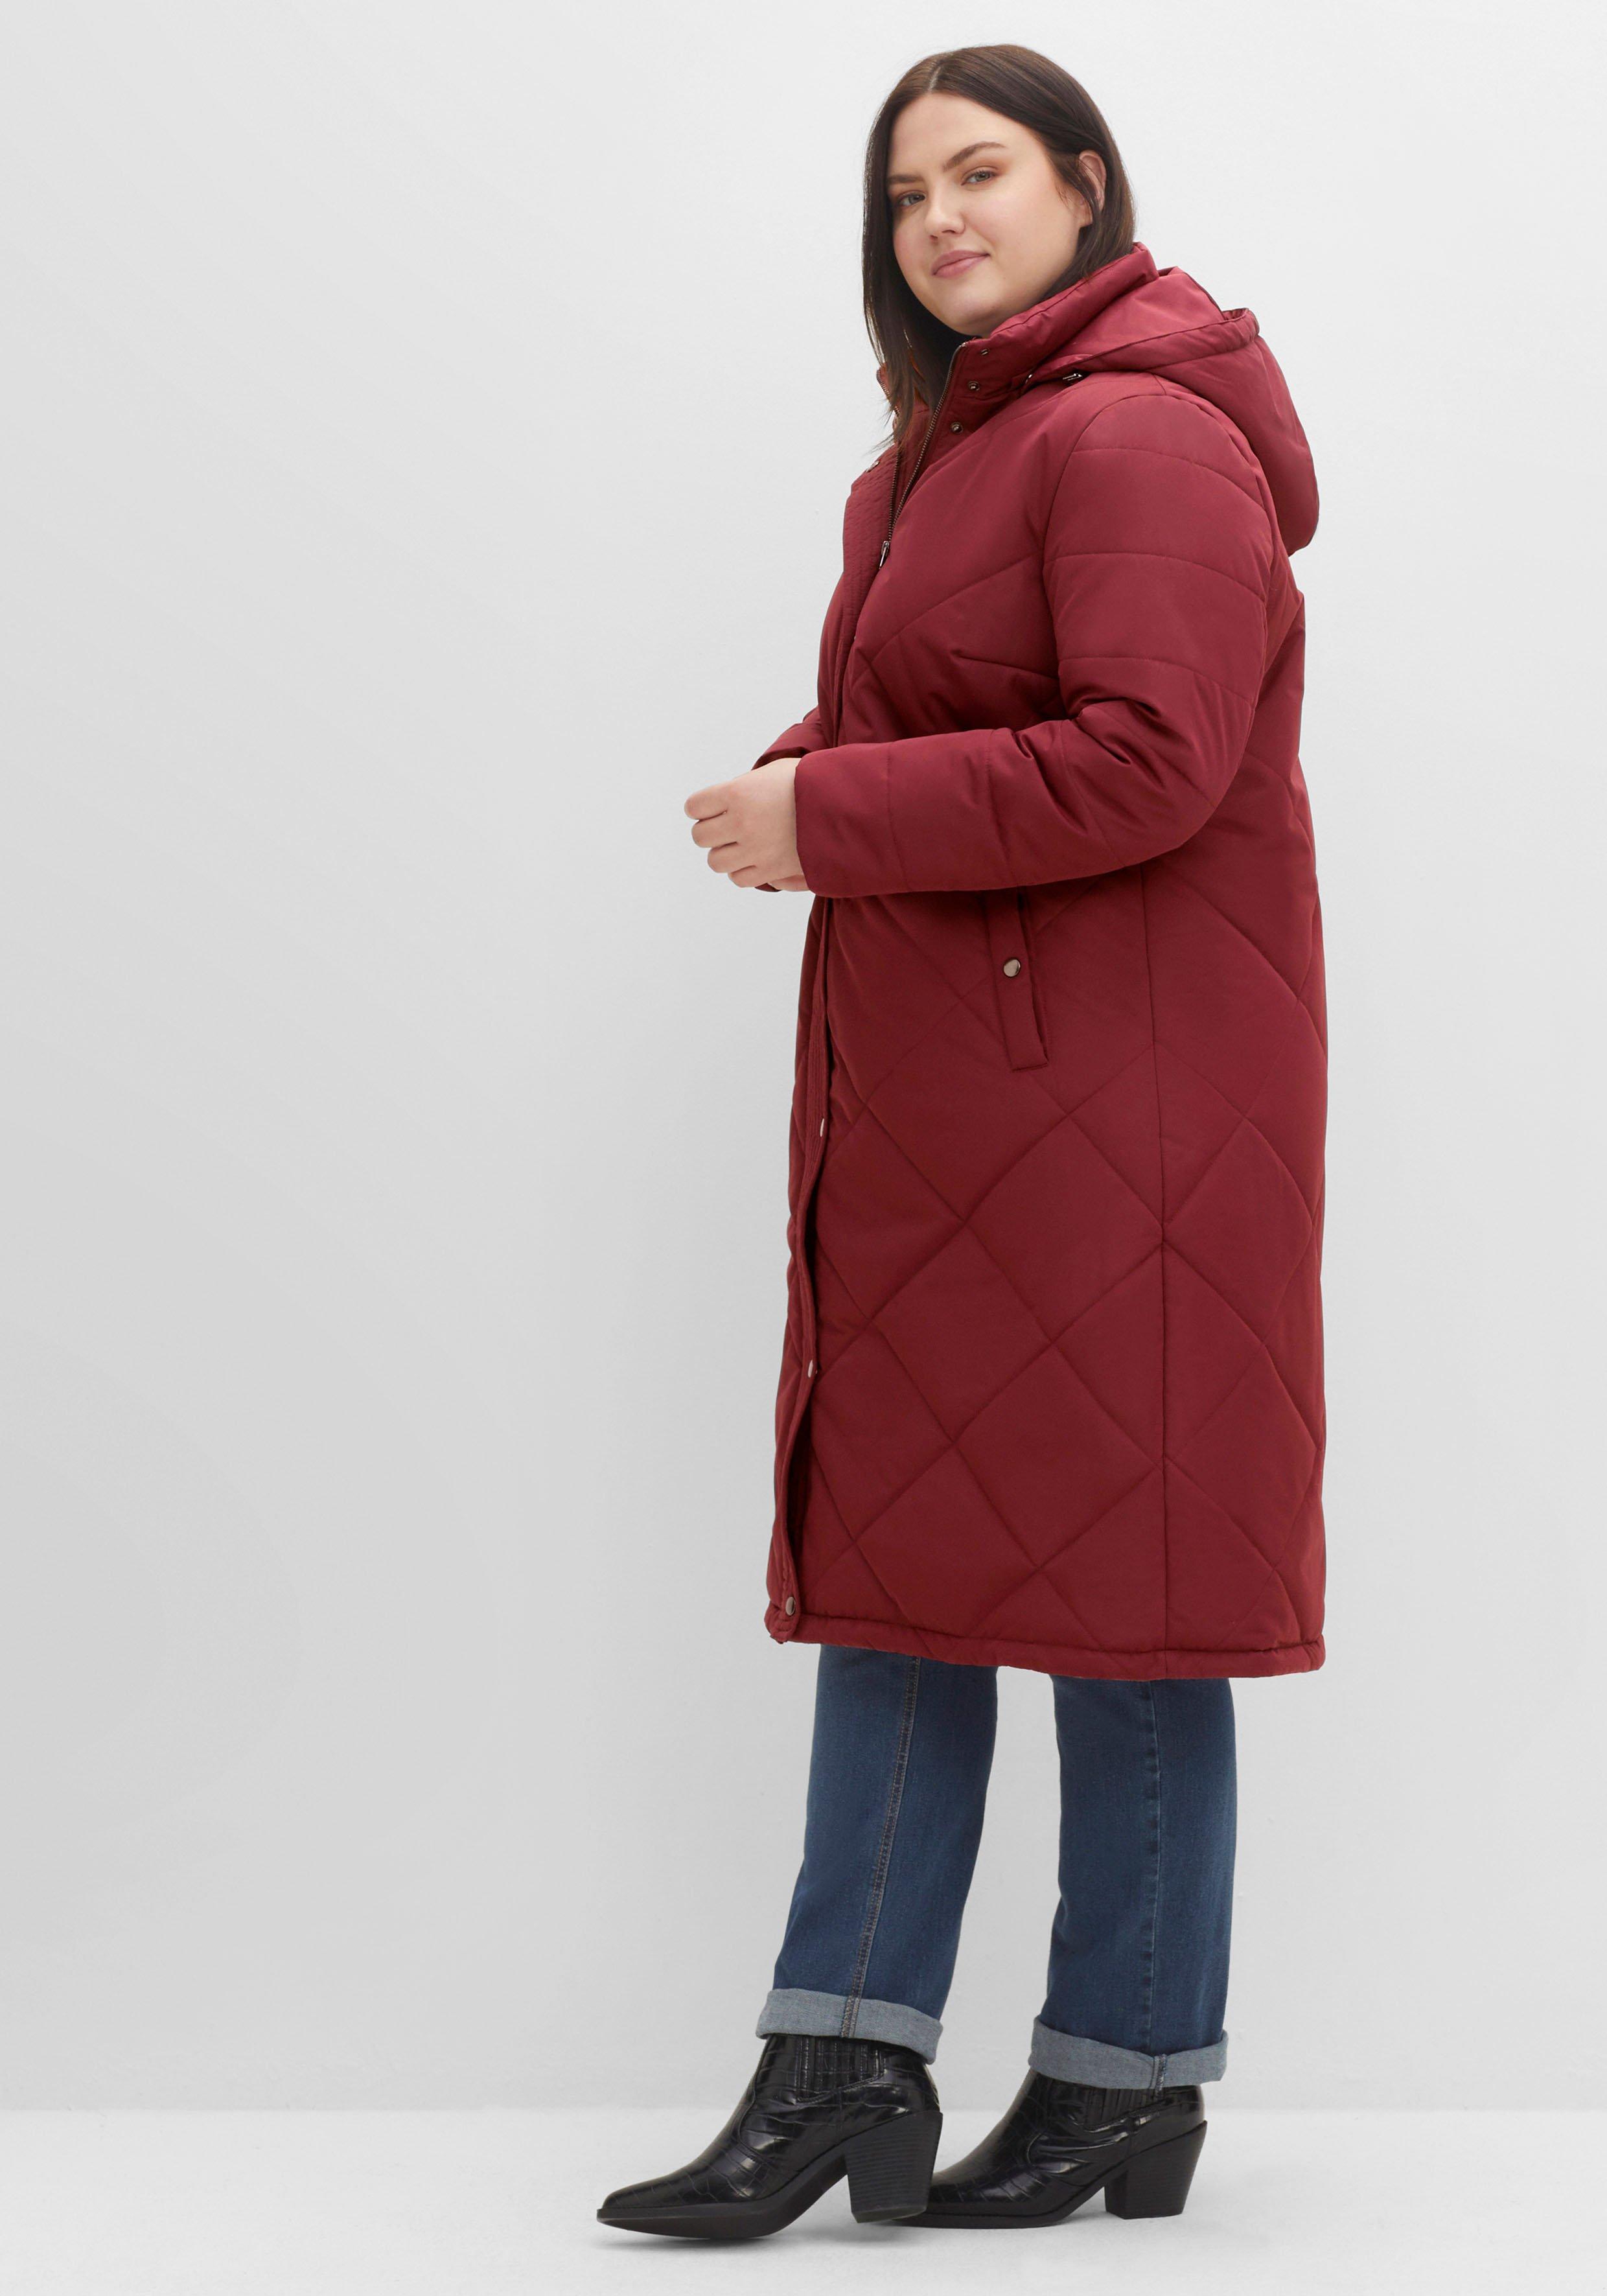 Mäntel rot sheego | Jacken Size Mode & Plus Größen ♥ Damen große